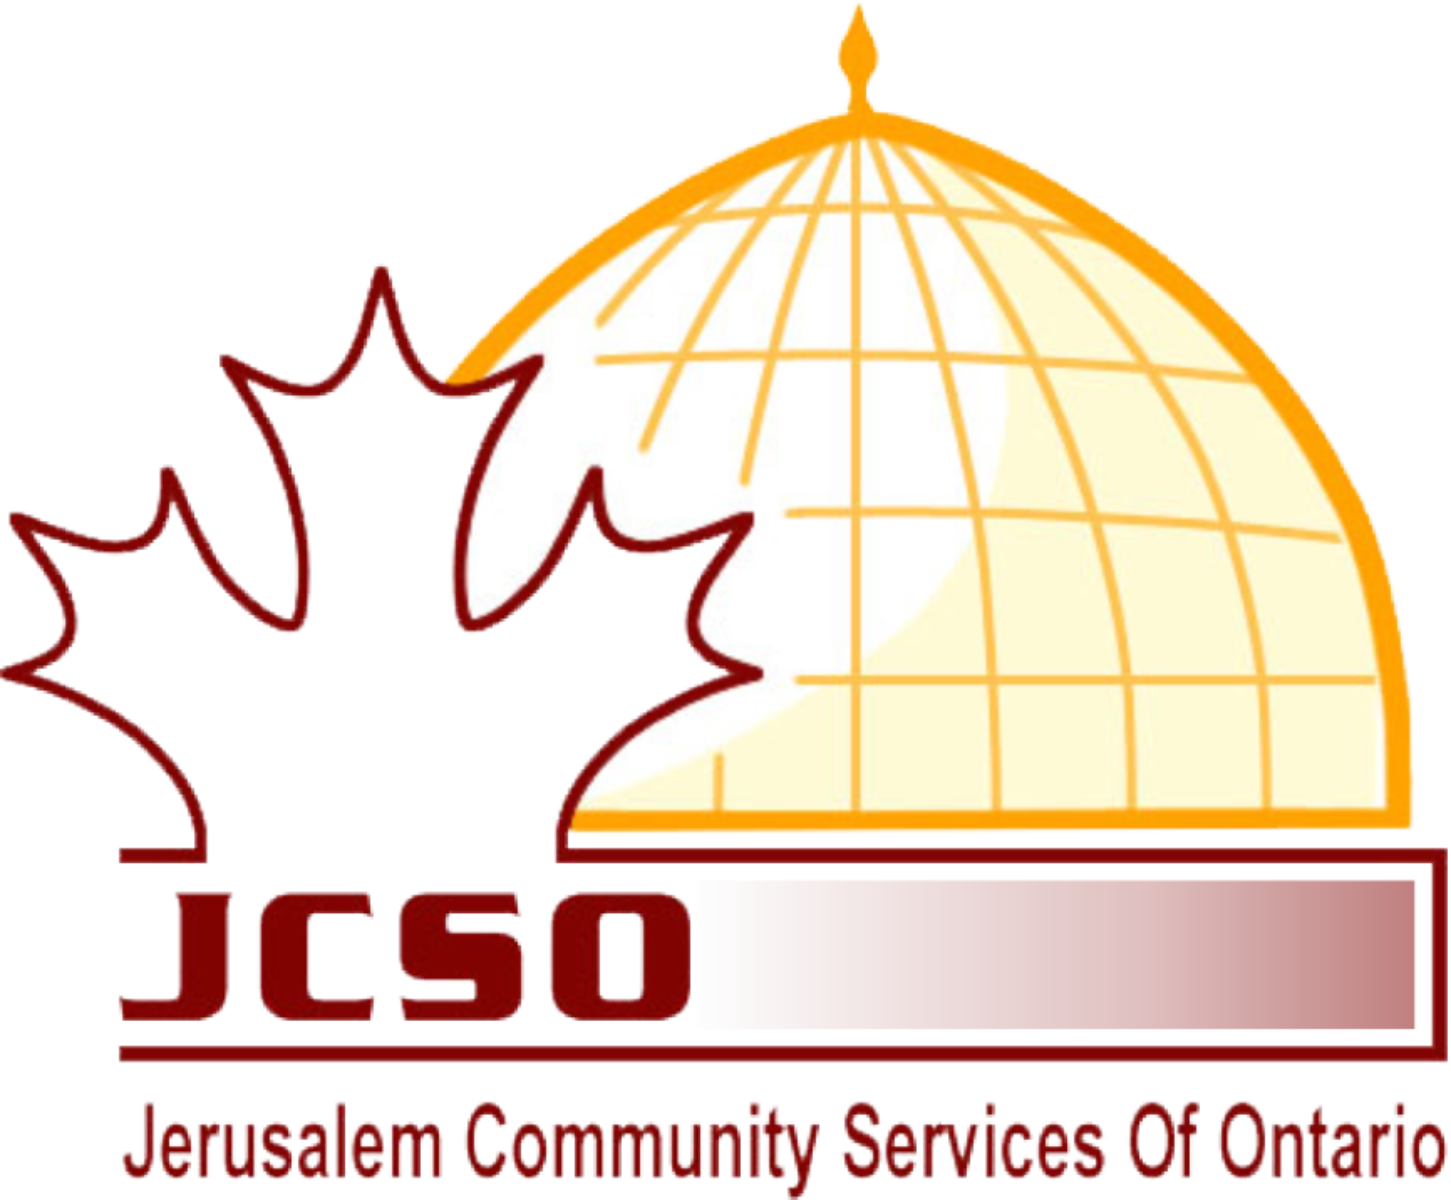 JCSO – Jerusalem Community Services of Ontario